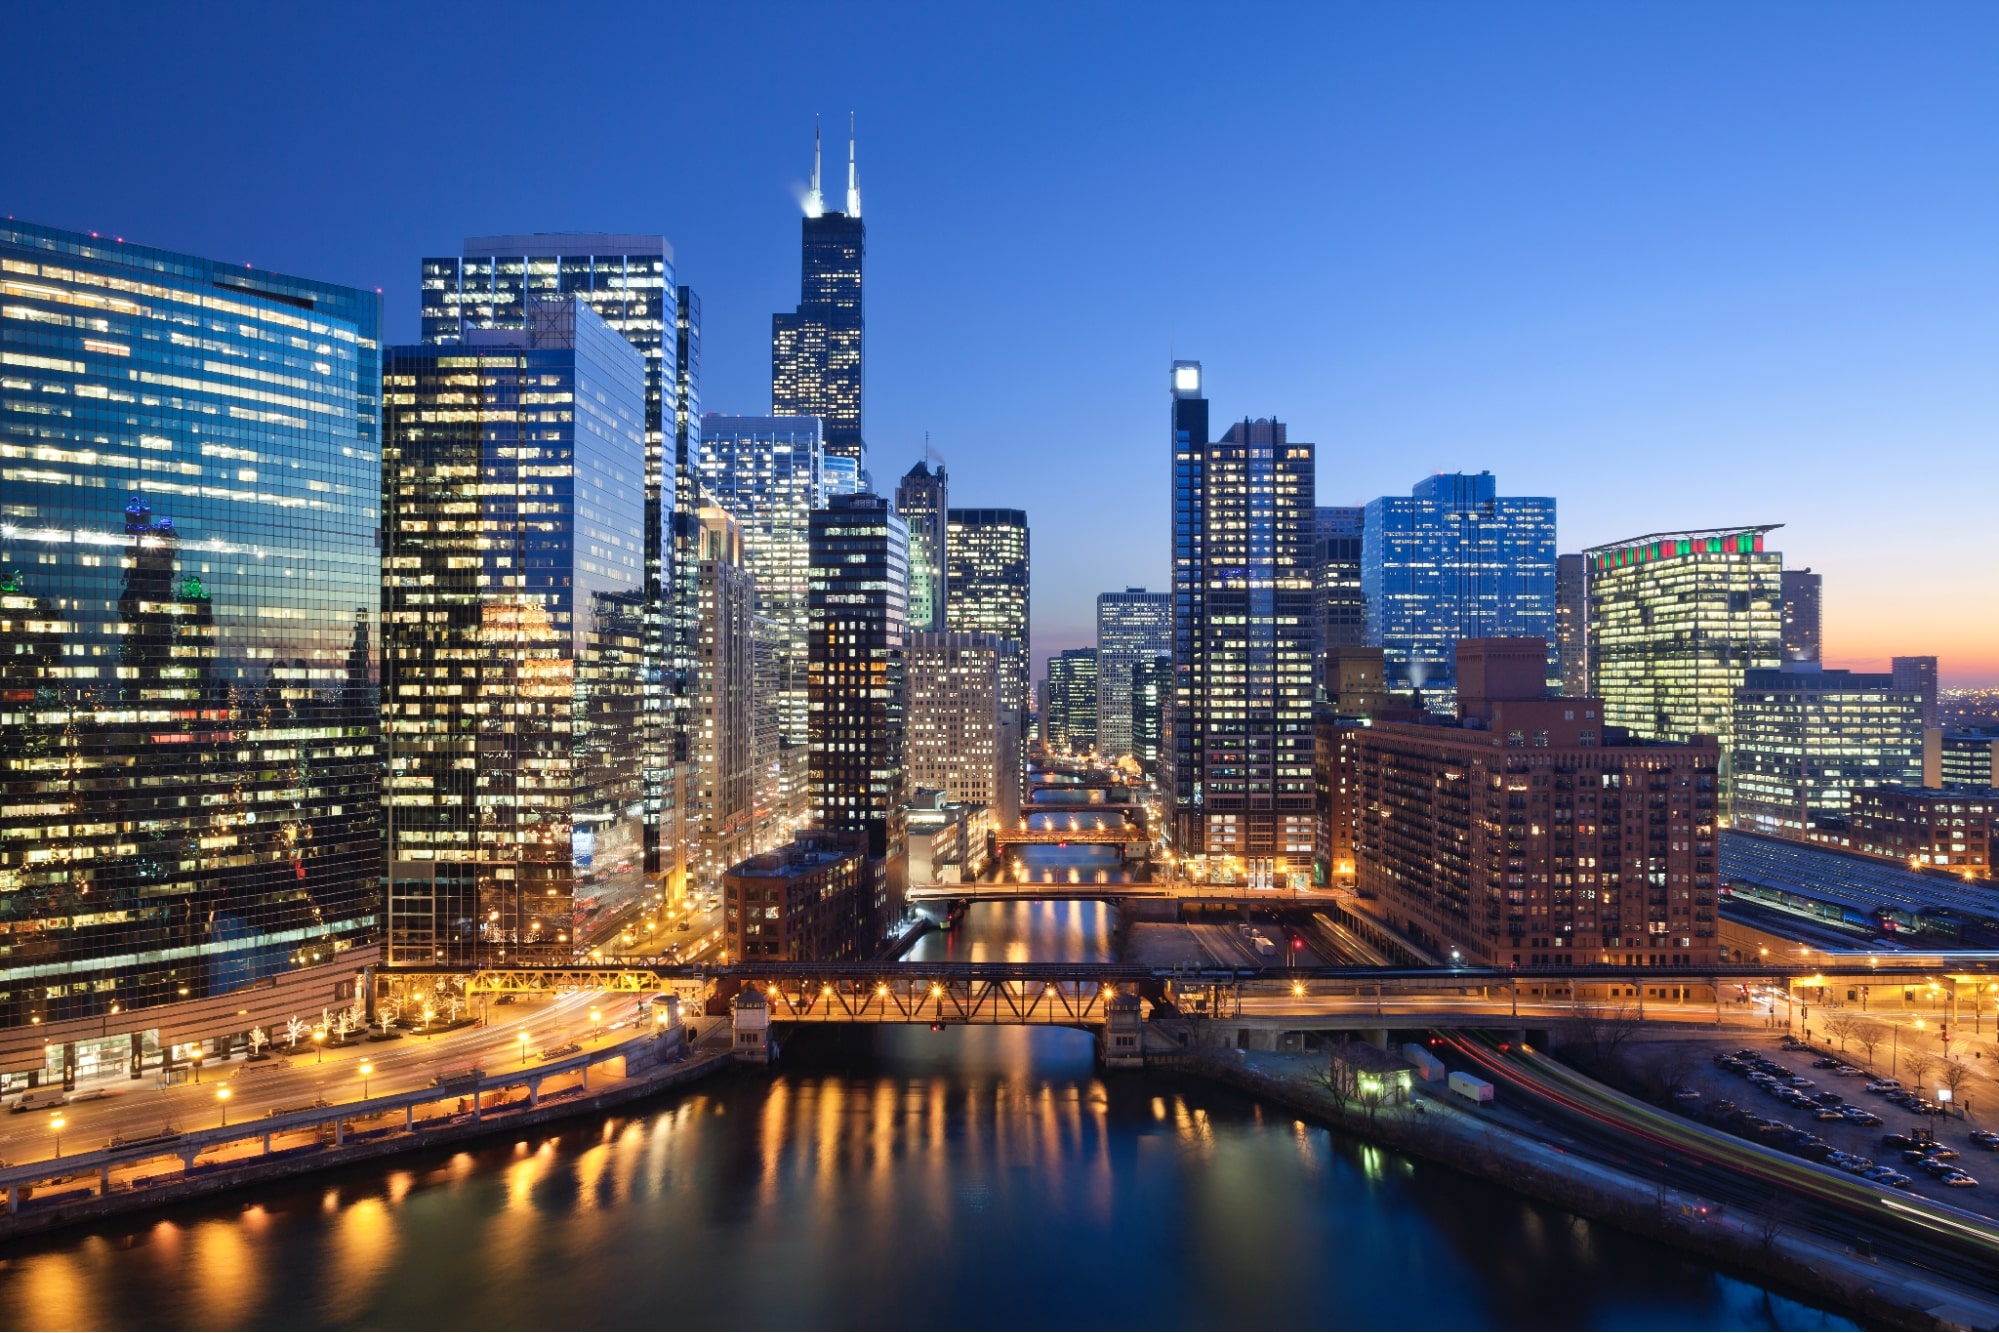 Best Neighborhoods to Stay in Chicago